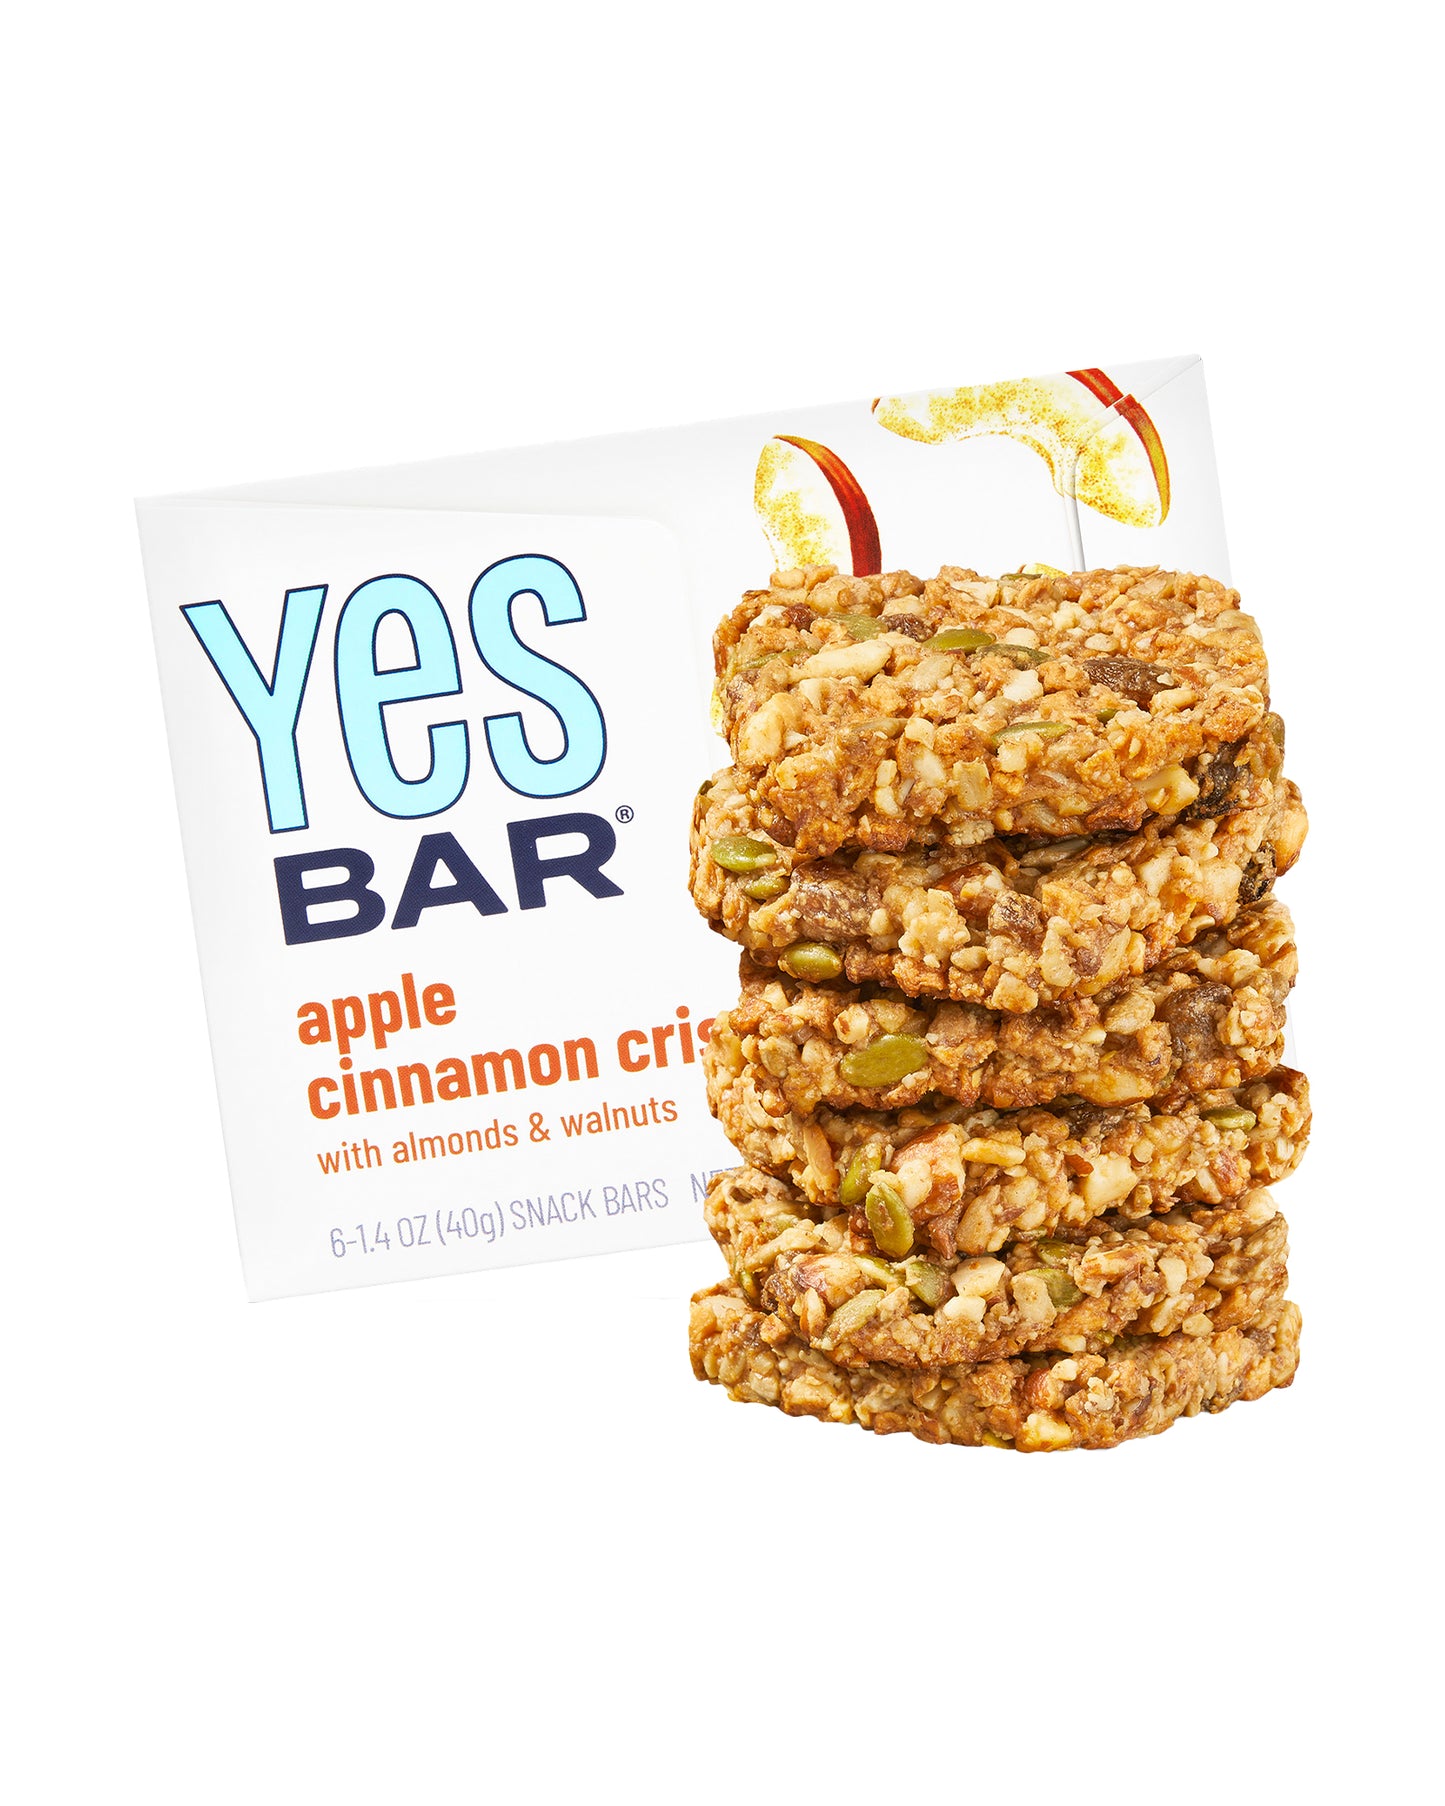 Apple Cinnamon Crisp Snack Bar- Box of 6